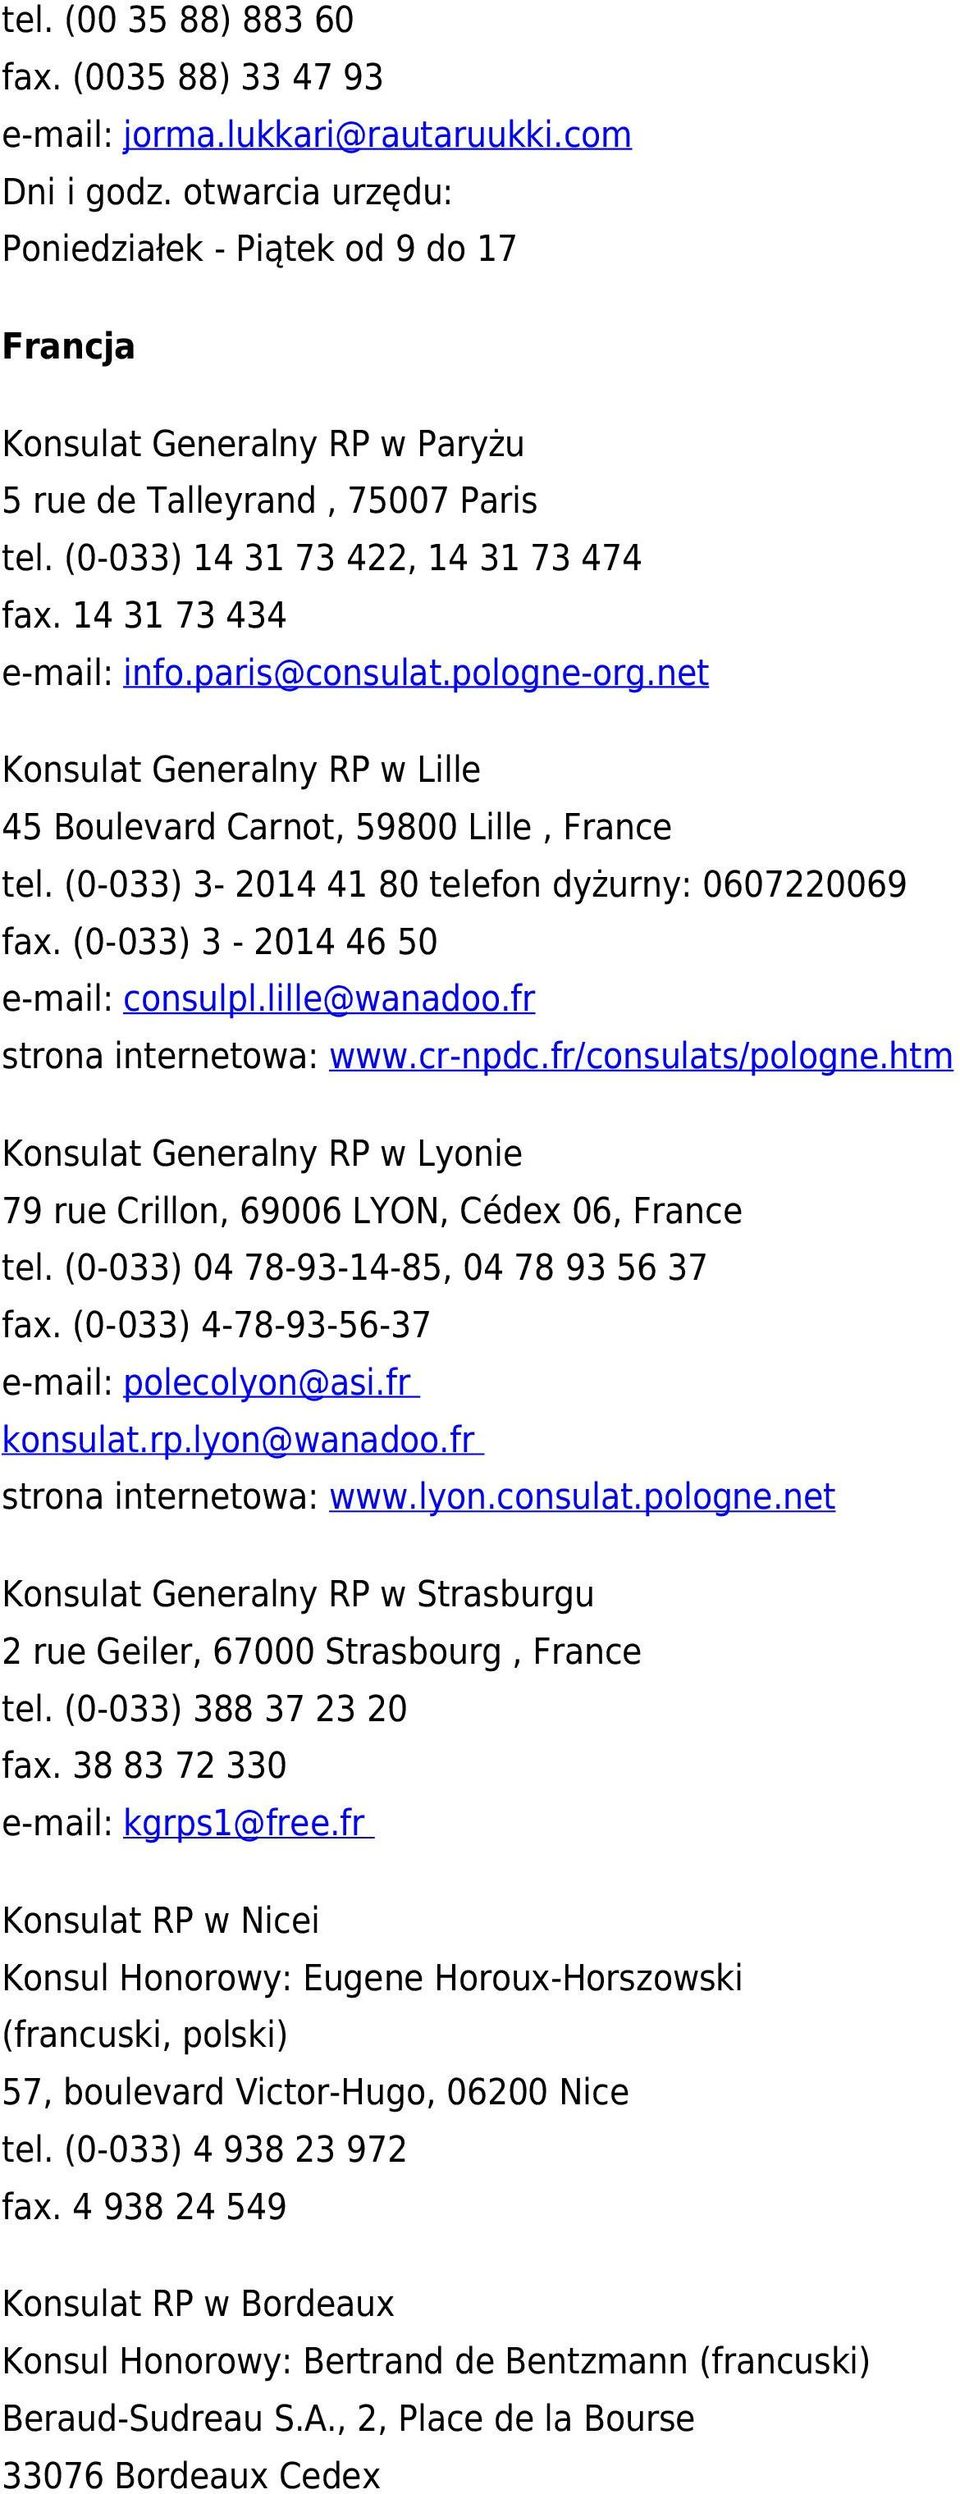 paris@consulat.pologne-org.net Konsulat Generalny RP w Lille 45 Boulevard Carnot, 59800 Lille, France tel. (0-033) 3-2014 41 80 telefon dyżurny: 0607220069 fax. (0-033) 3-2014 46 50 e-mail: consulpl.